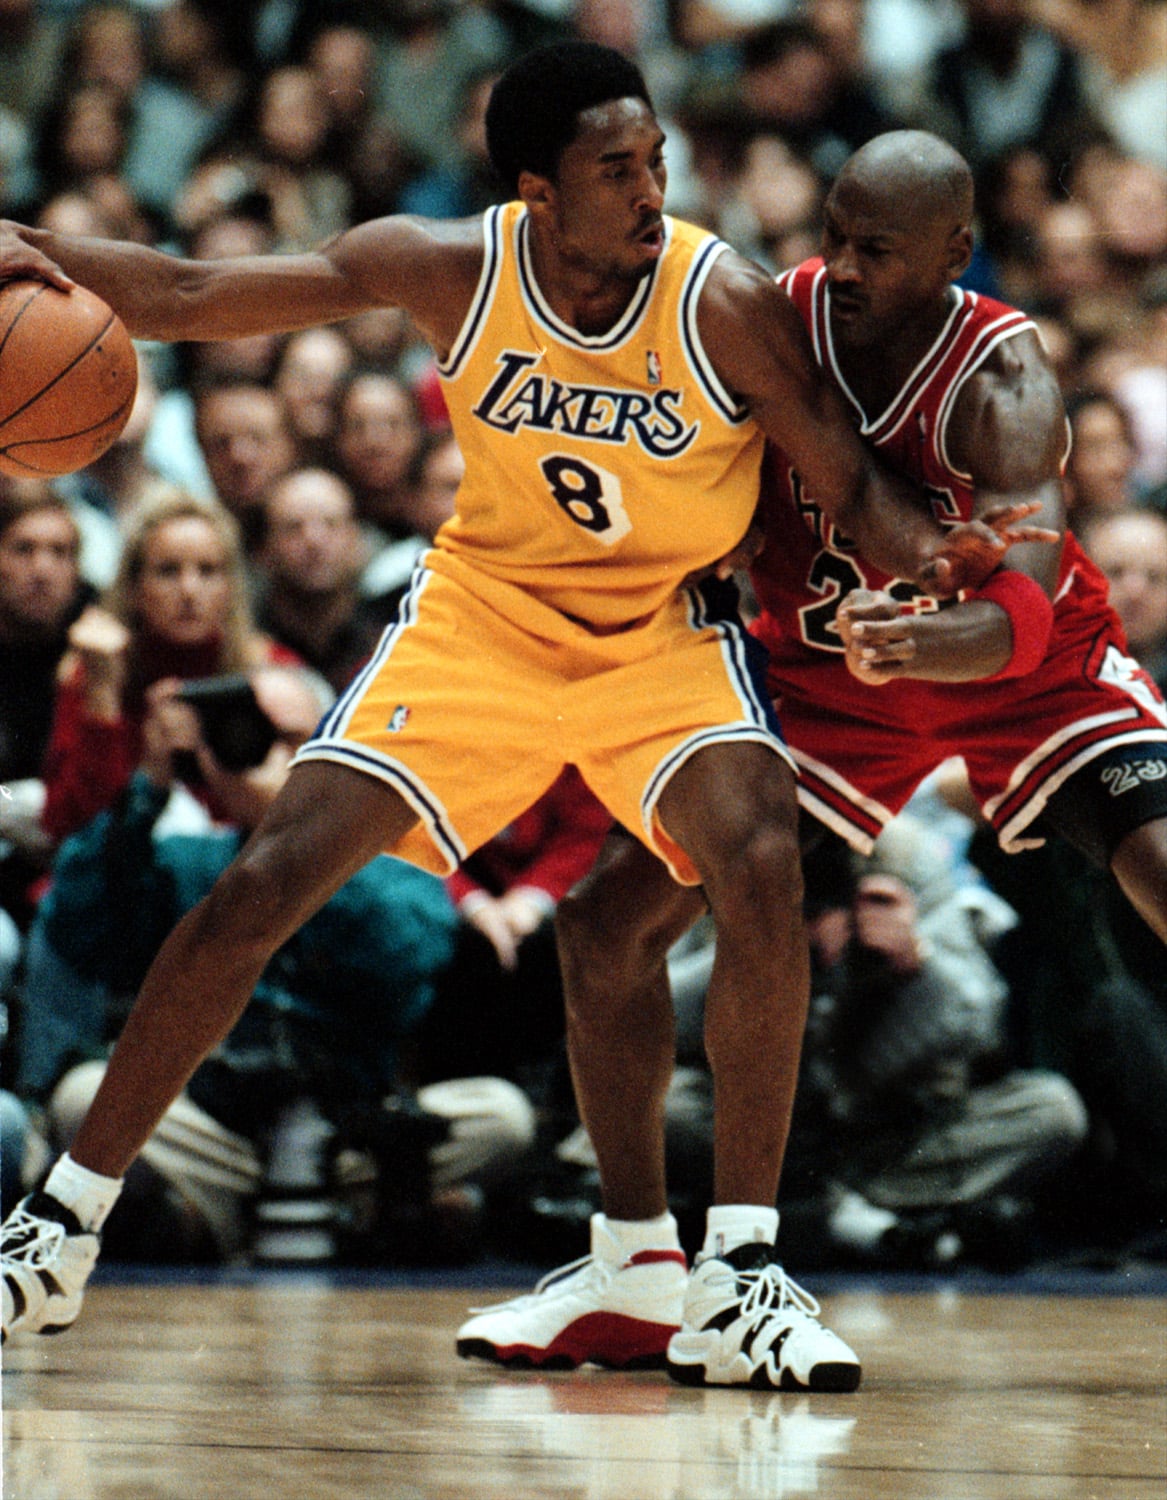 defensa Decir Deflector Photos of Michael Jordan and Kobe Bryant | POPSUGAR Fitness